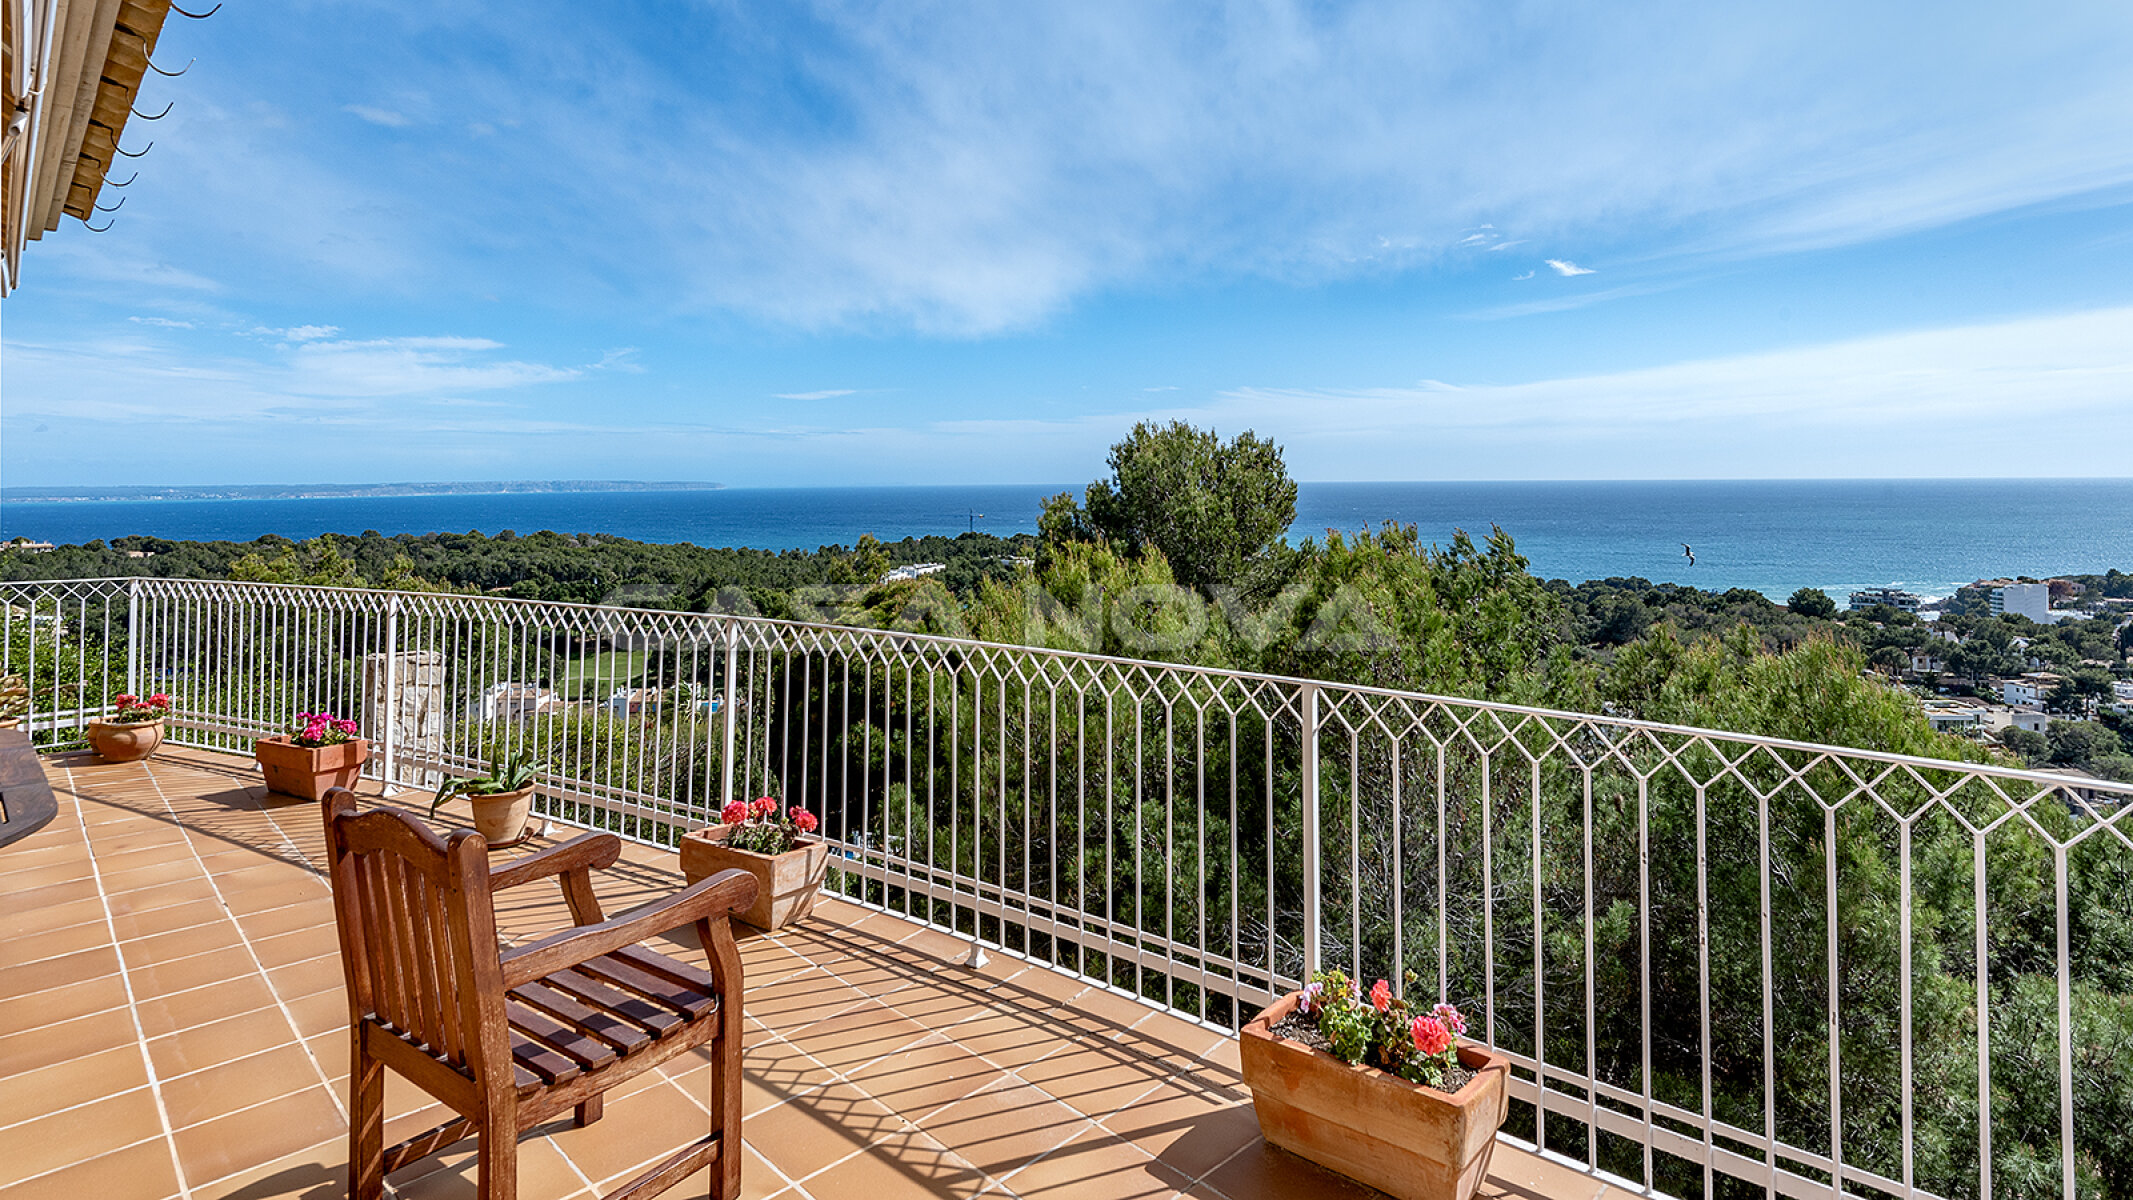 Mediterranean luxury villa in exclusive residential area